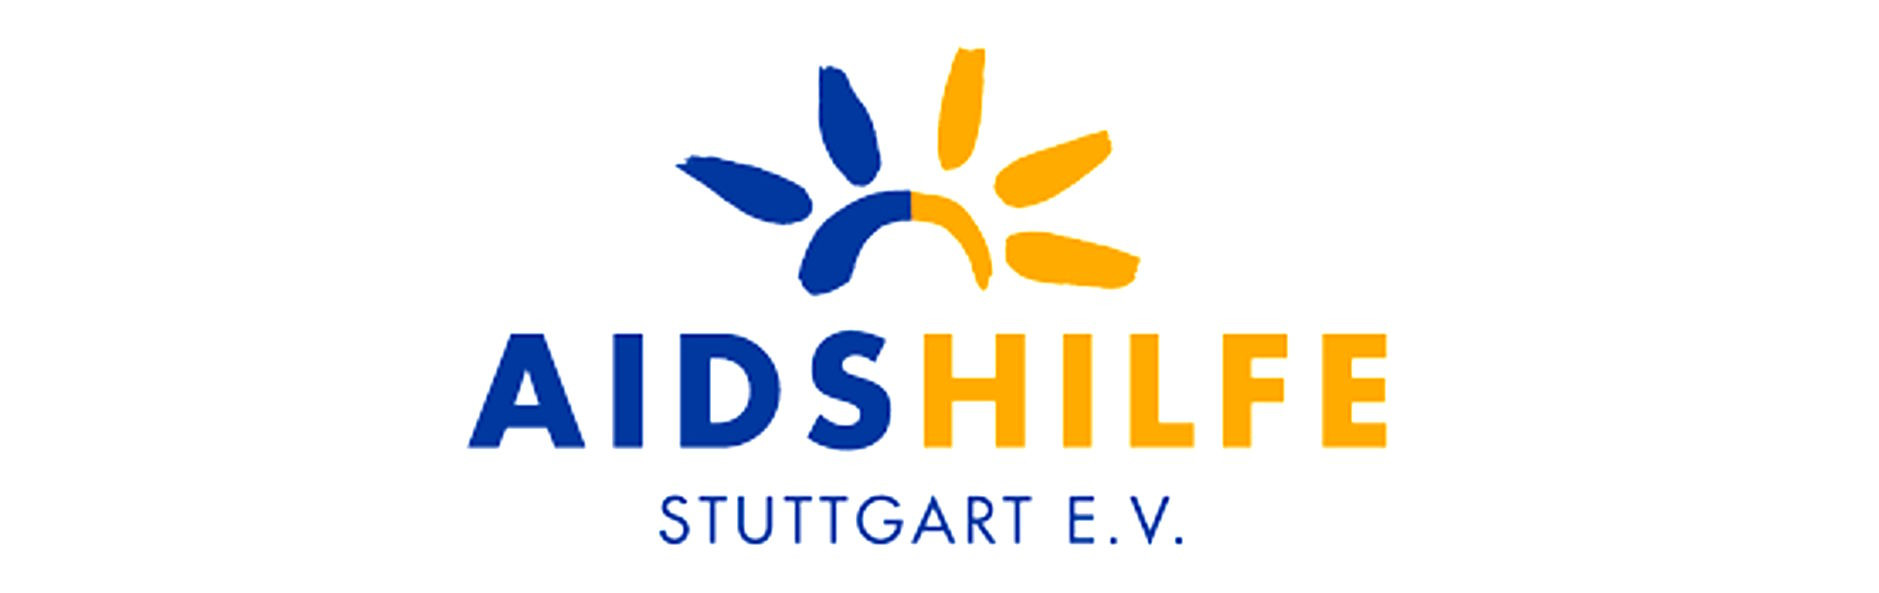 Aidshilfe Stuttgart